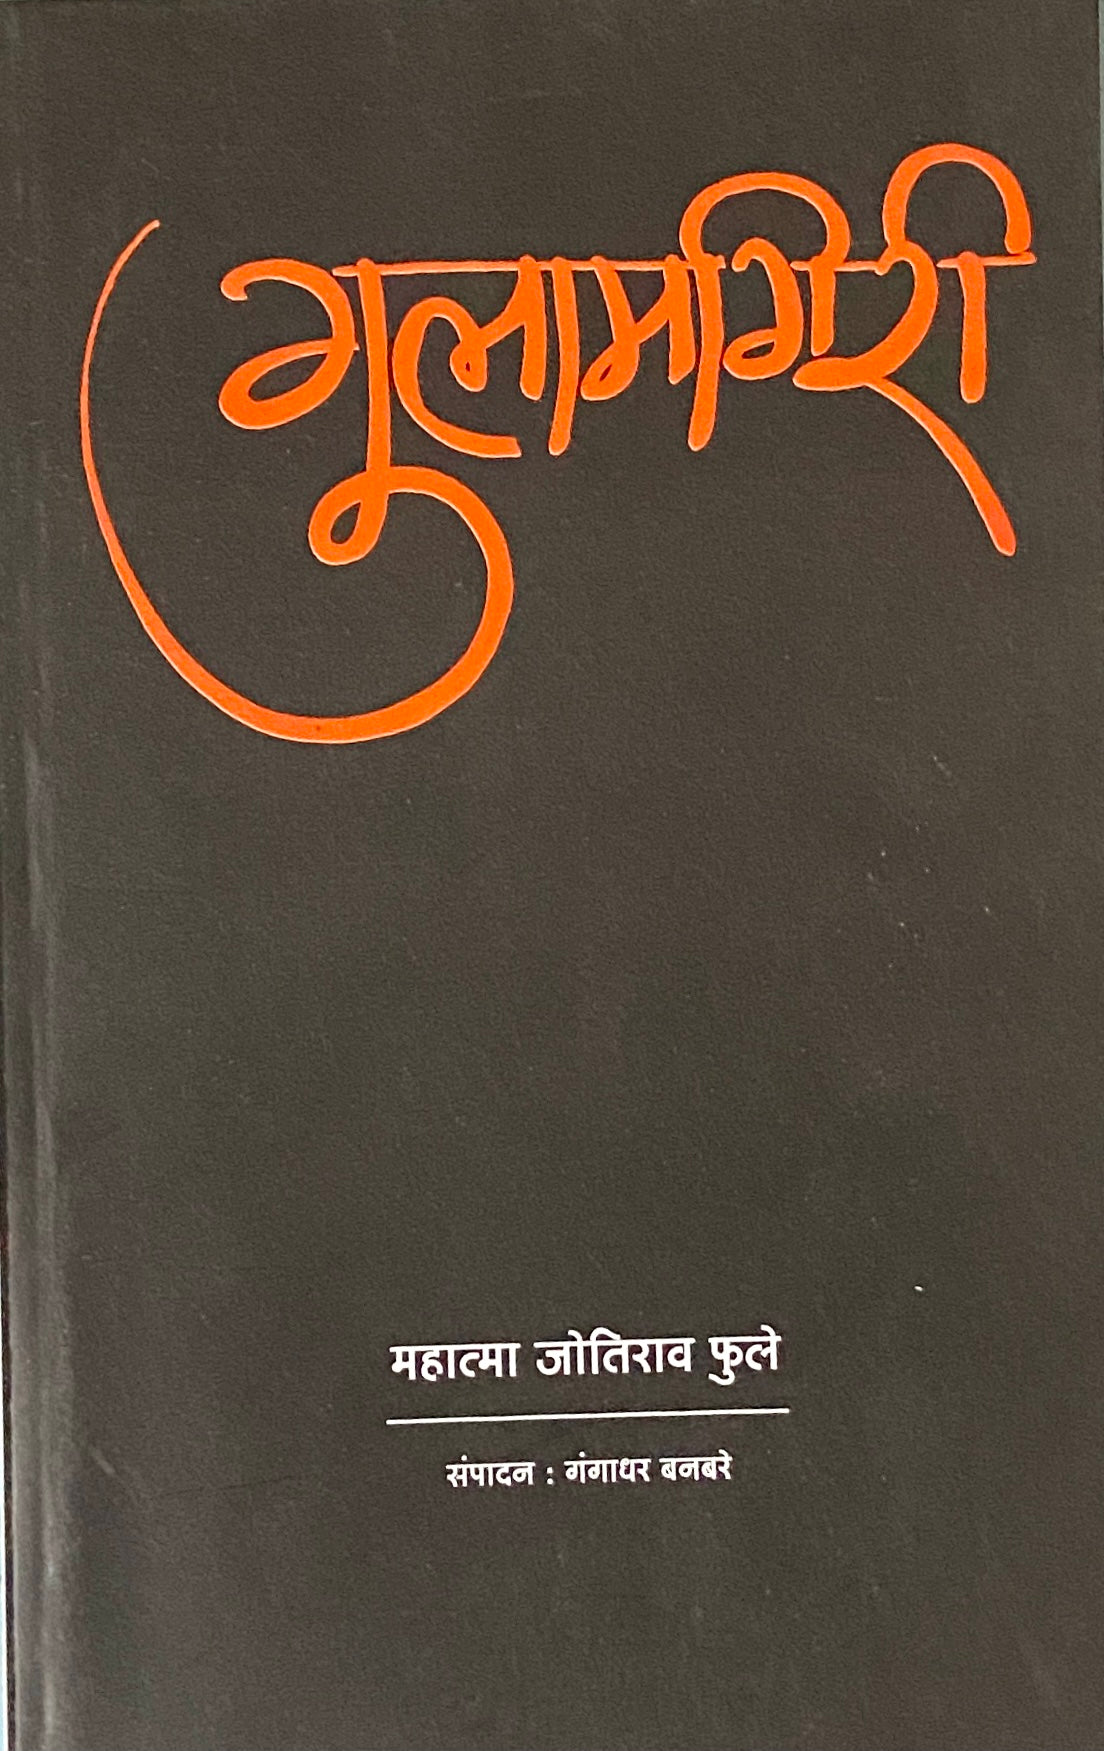 Gulamgiri by Mahatma Jyotirao Phule  Half Price Books India Books inspire-bookspace.myshopify.com Half Price Books India